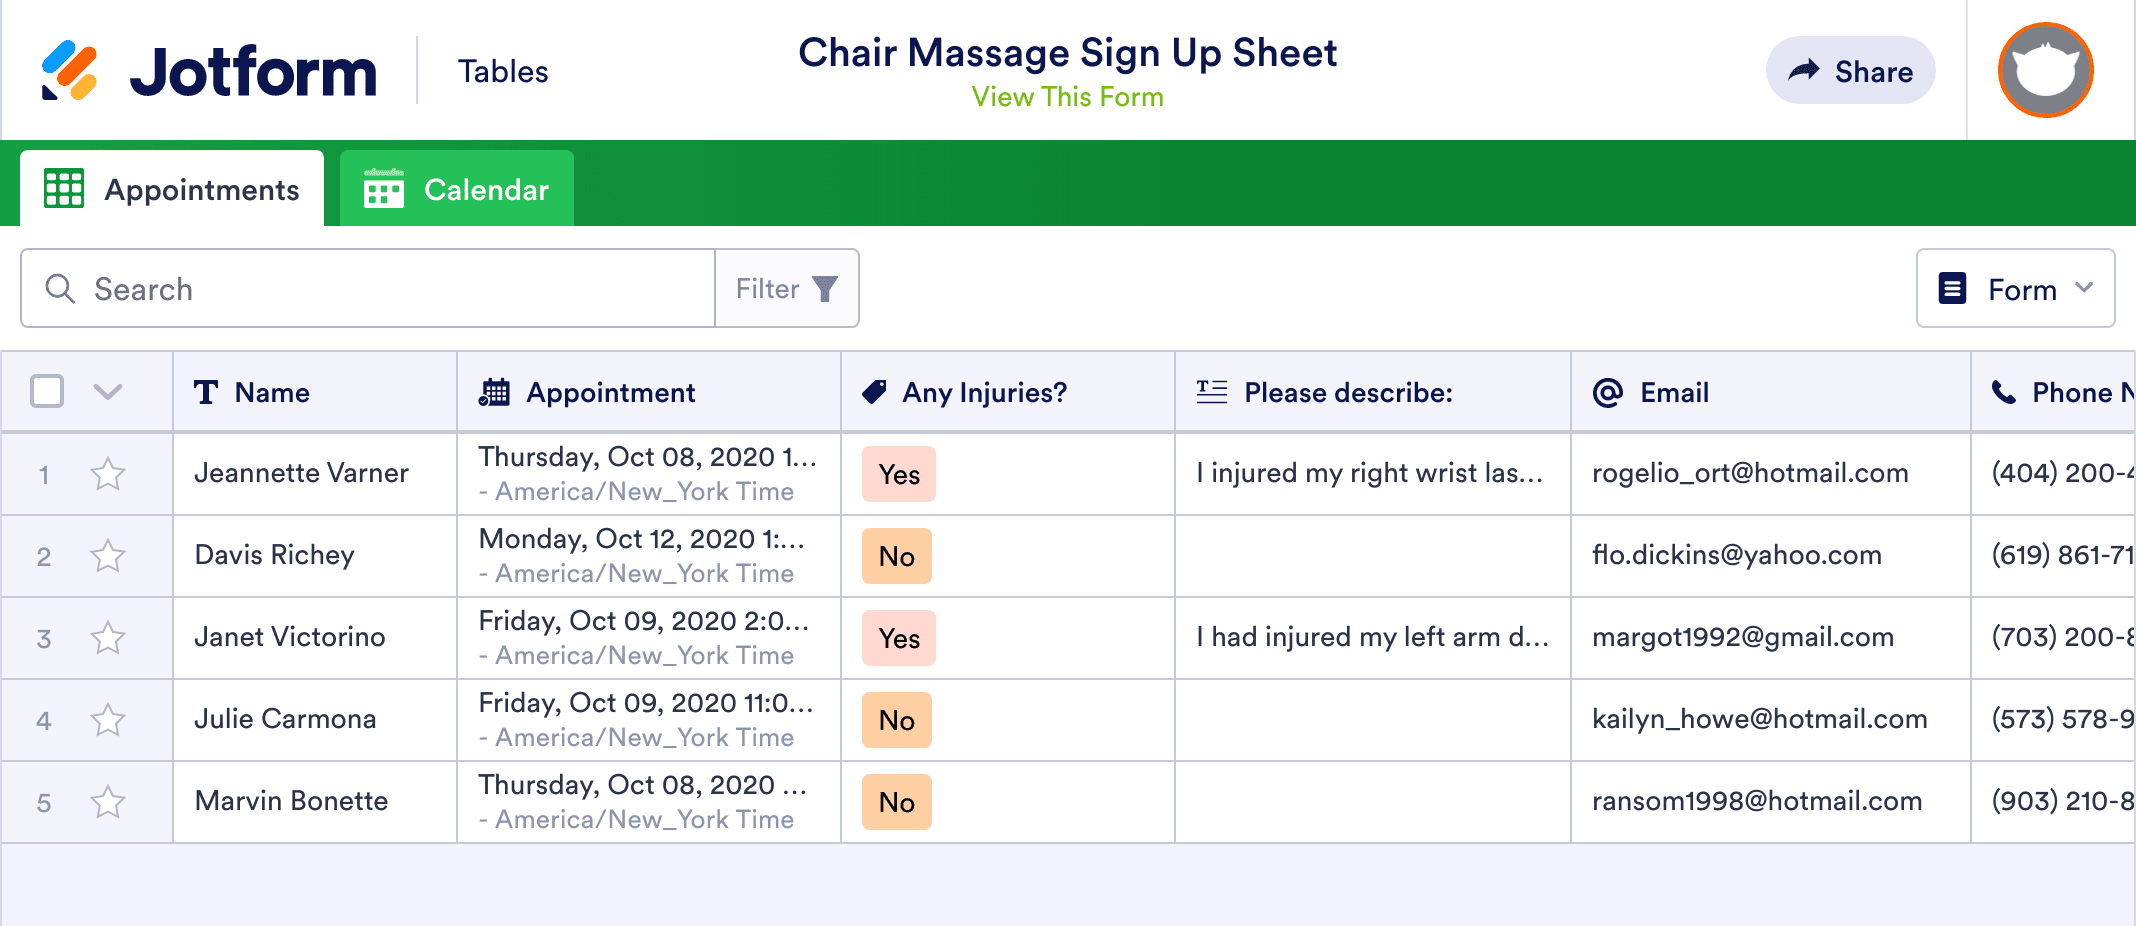 Chair Massage Sign Up Sheet Template | Jotform Tables